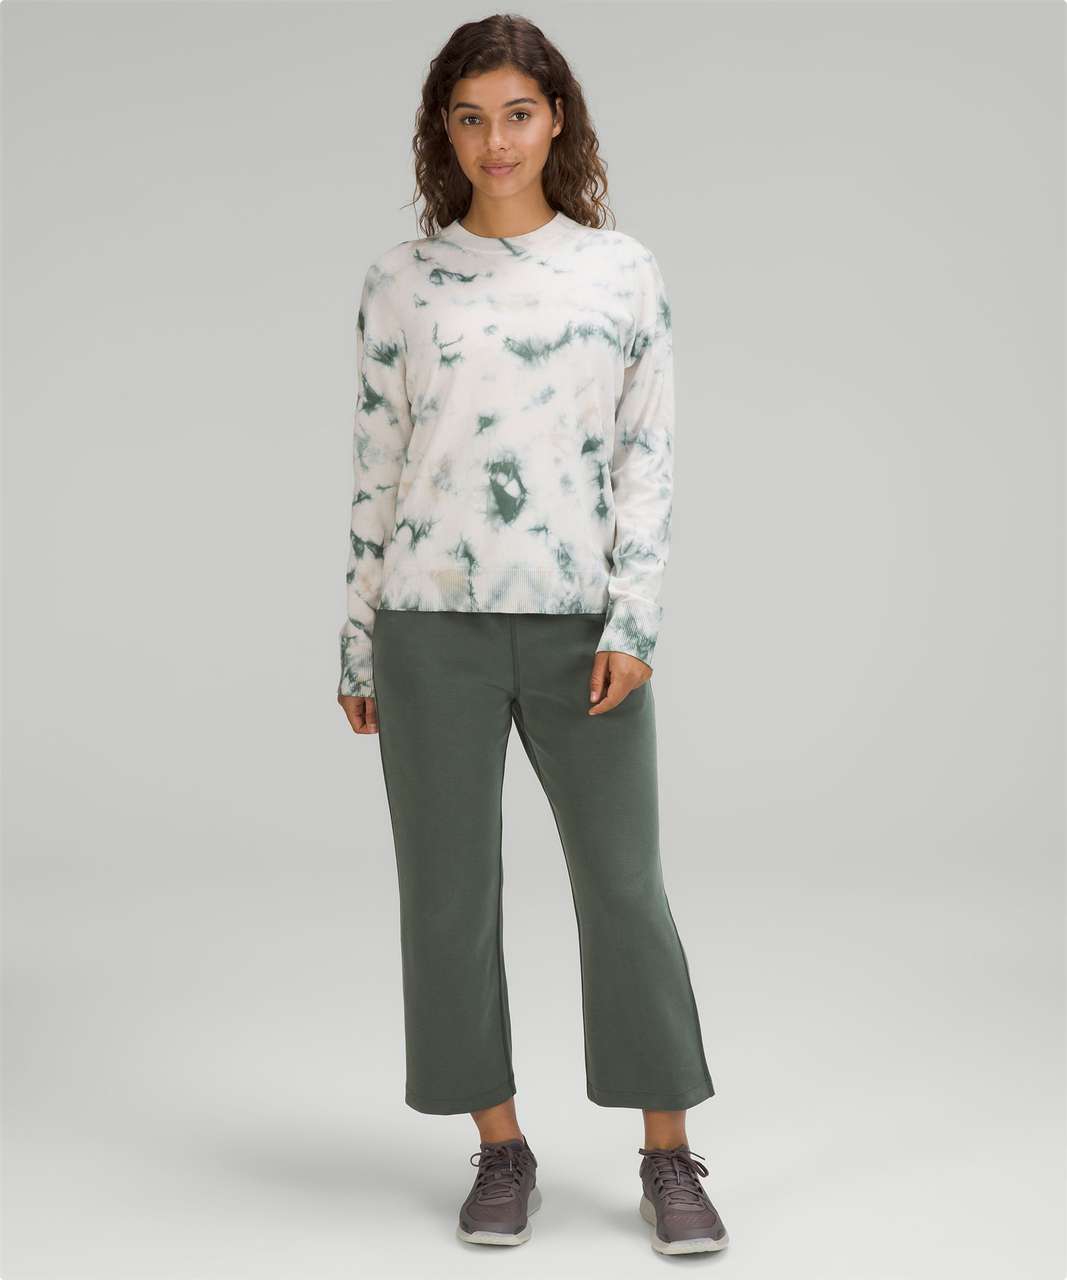 Lululemon Tie Dye Crewneck Sweater - Green Multi